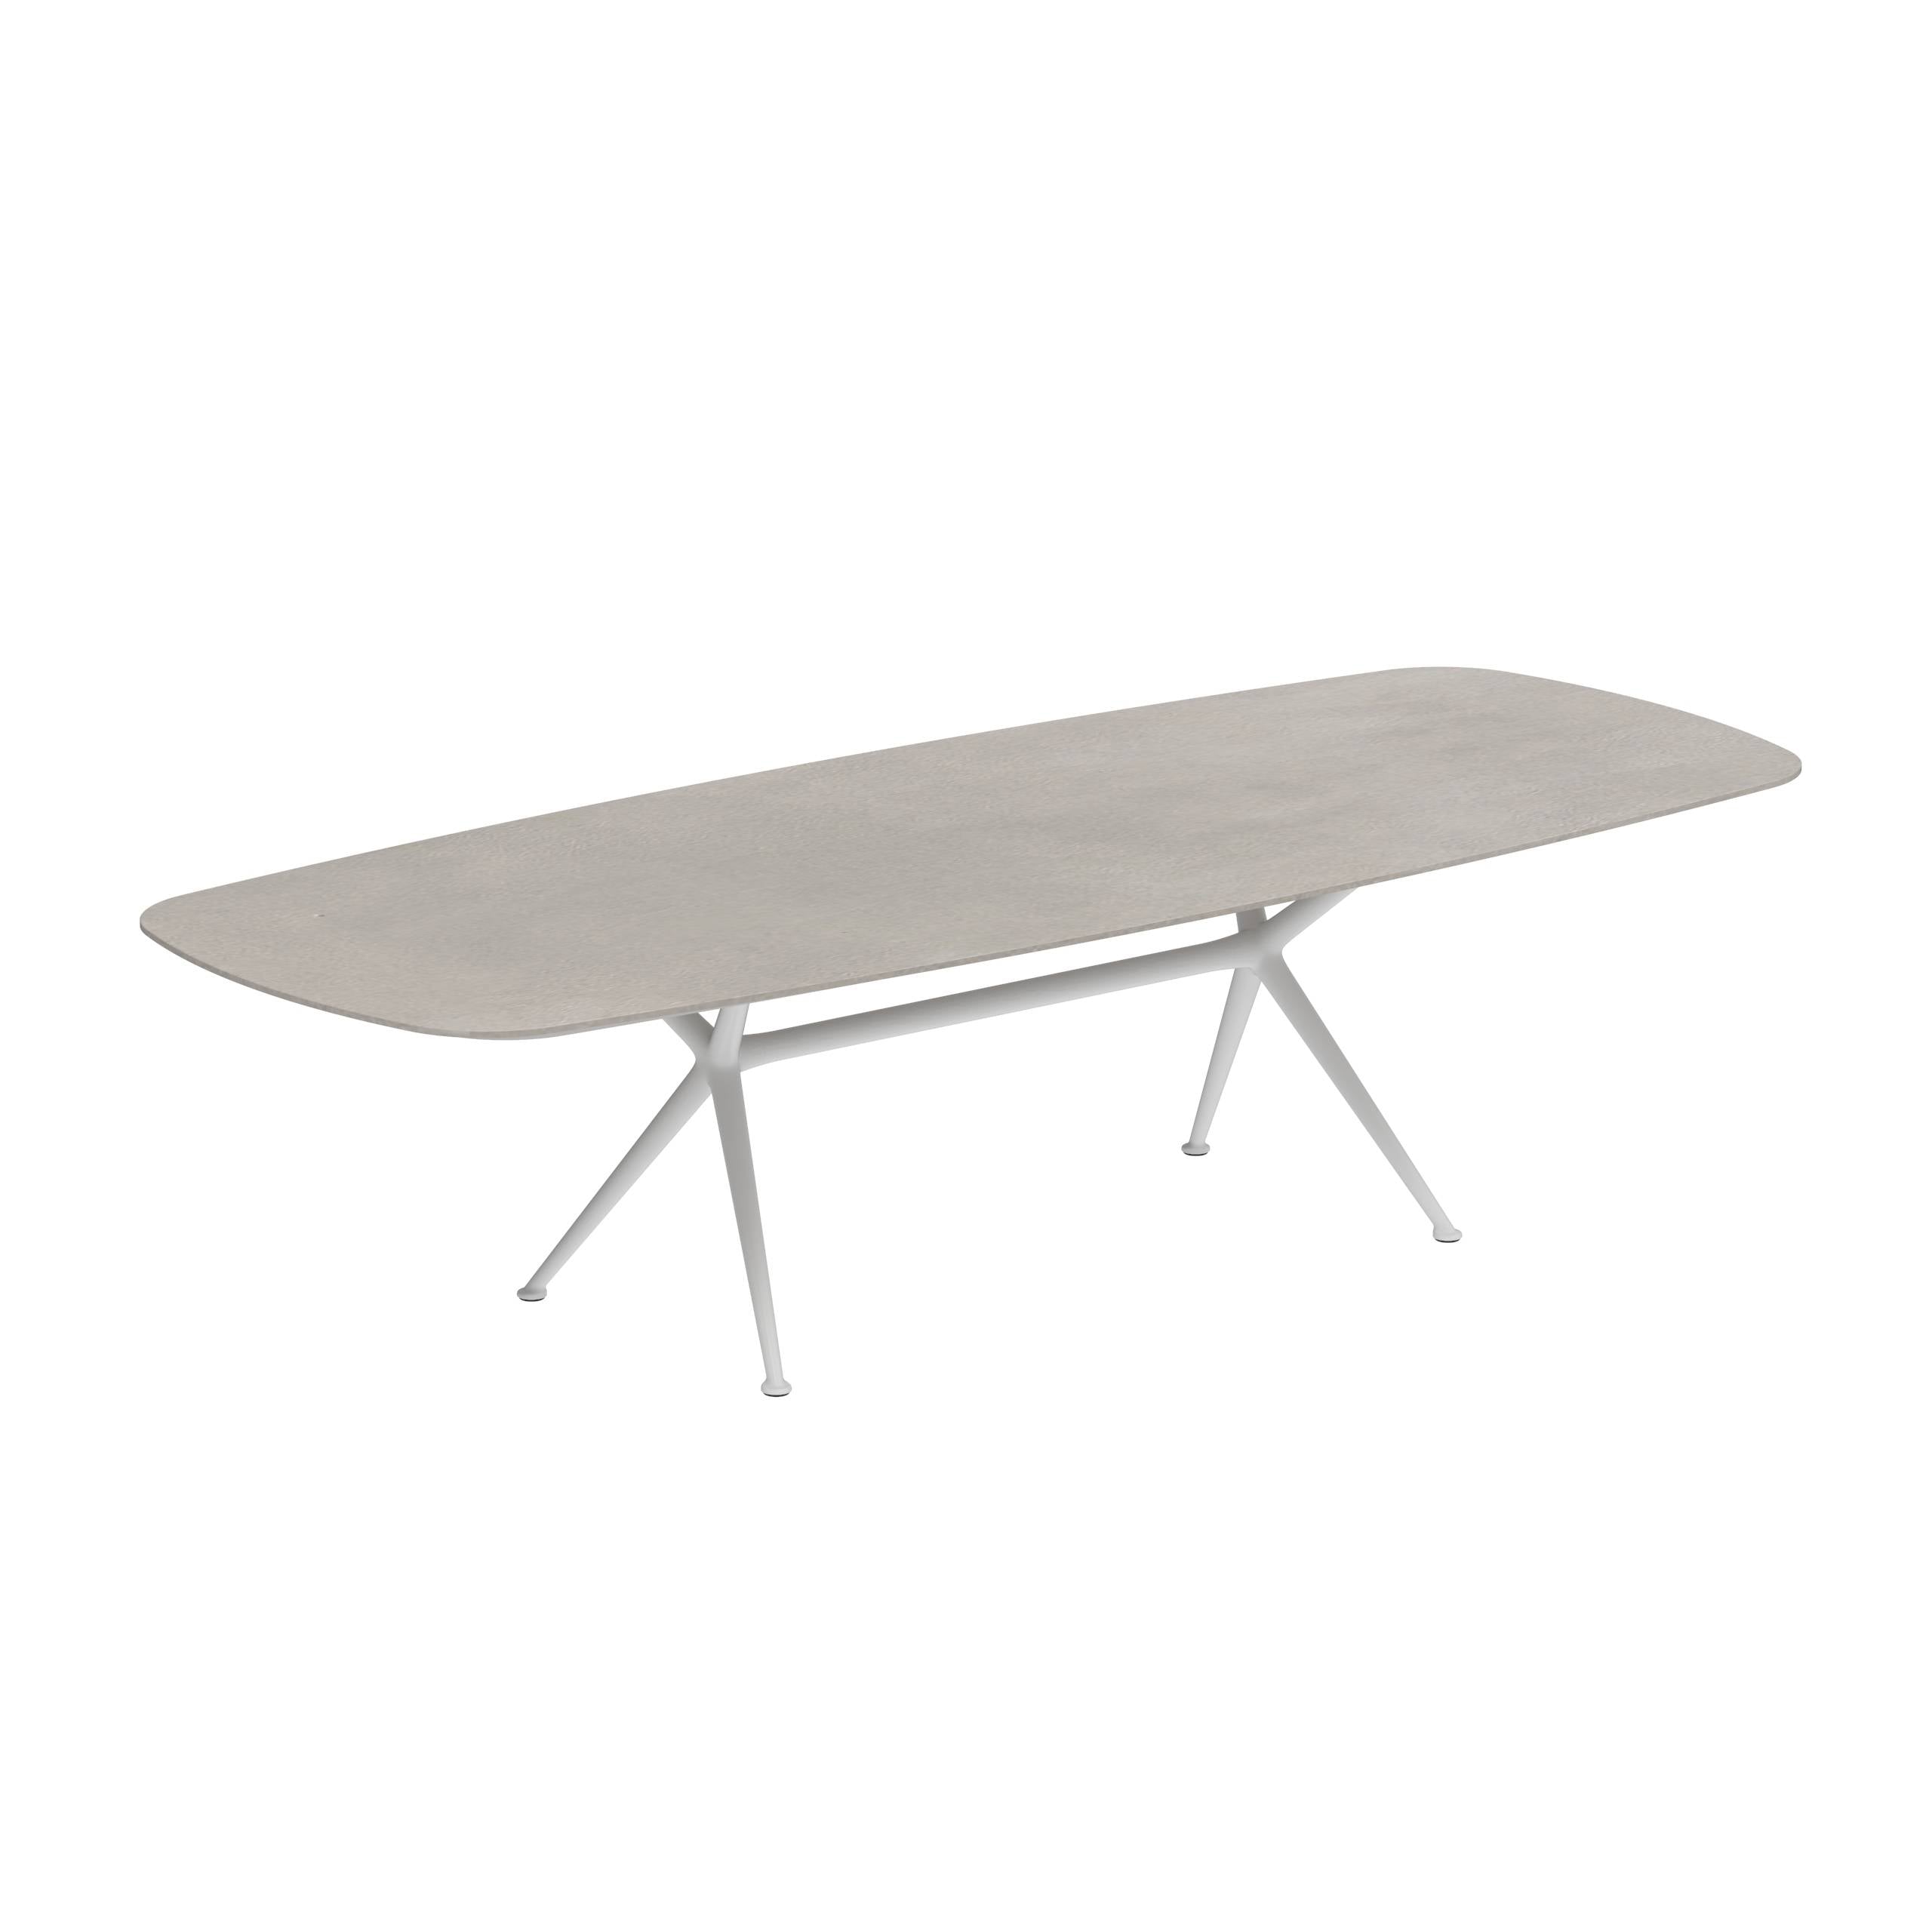 Exes Table 300x120cm Alu Legs White - Table Top Ceramic Cemento Luminoso